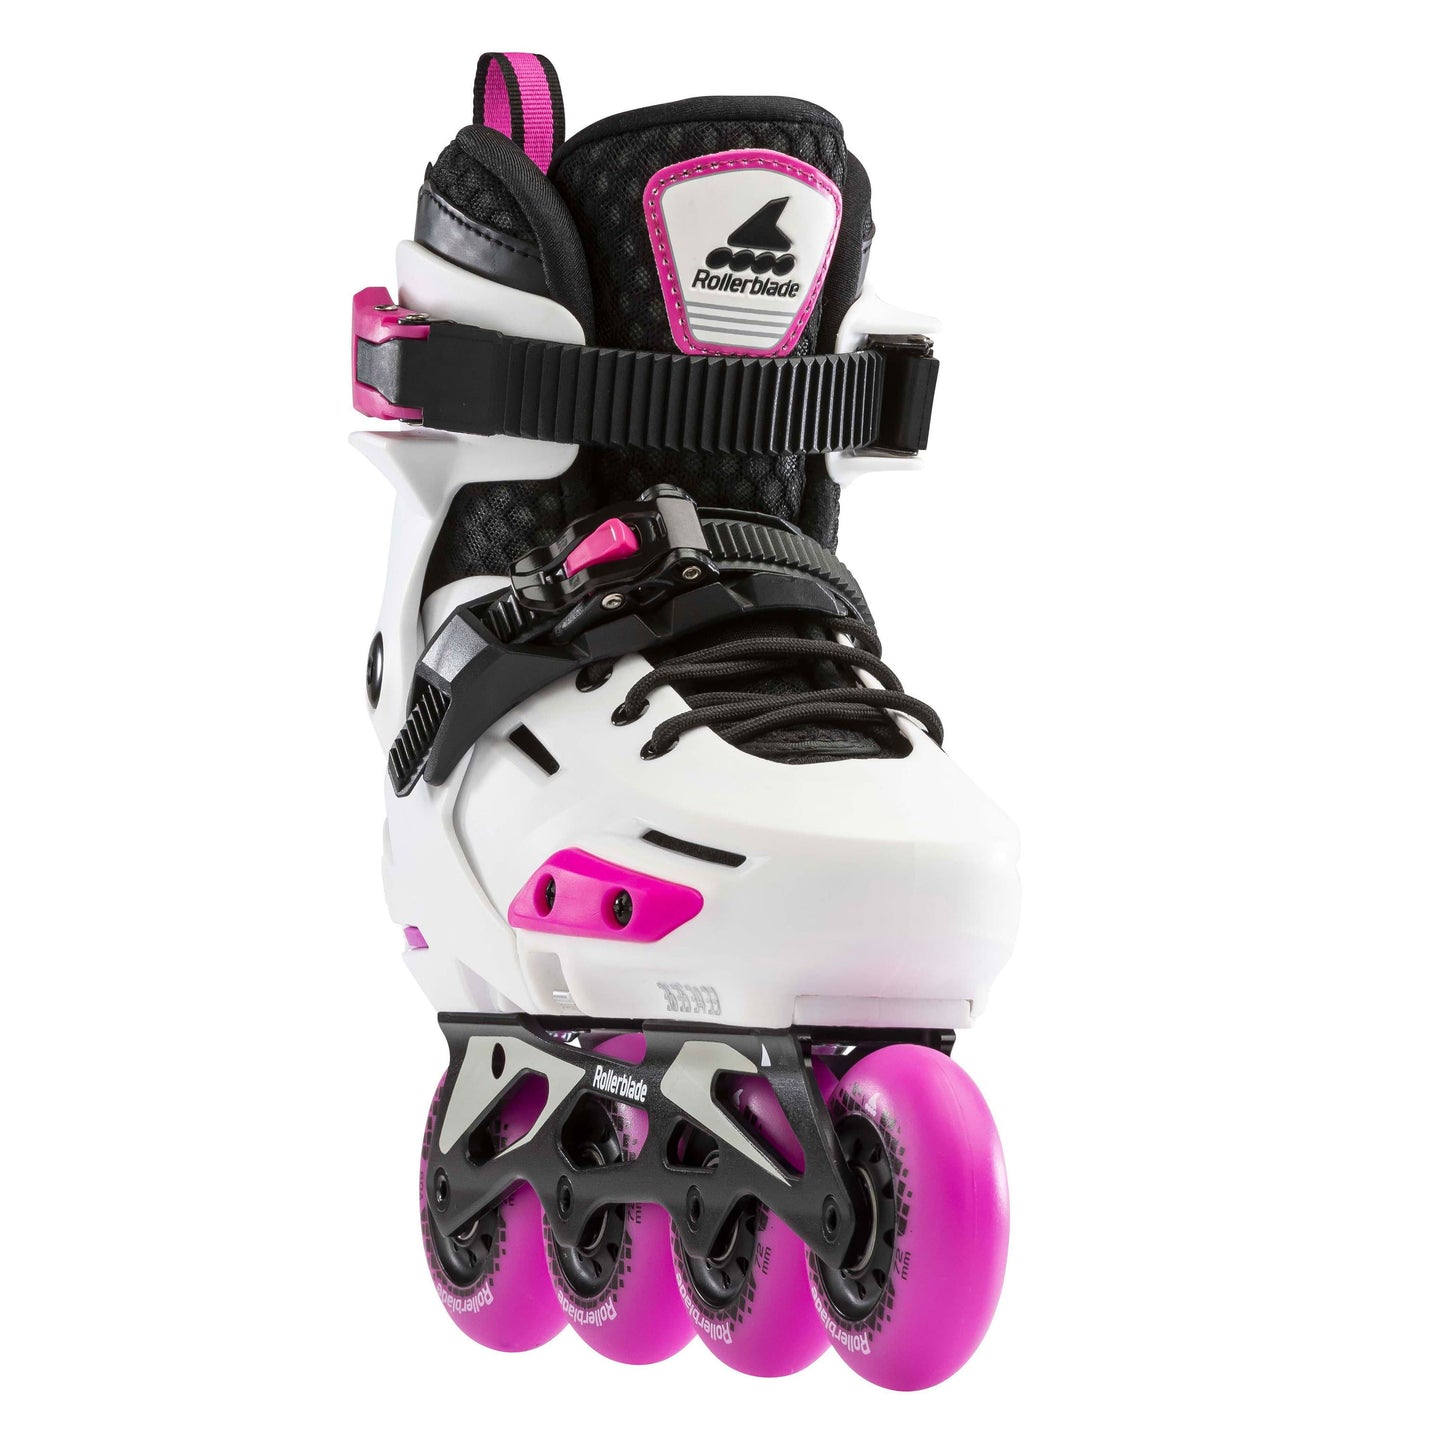 Rollerblade Apex G (Adjustable) – White/Pink